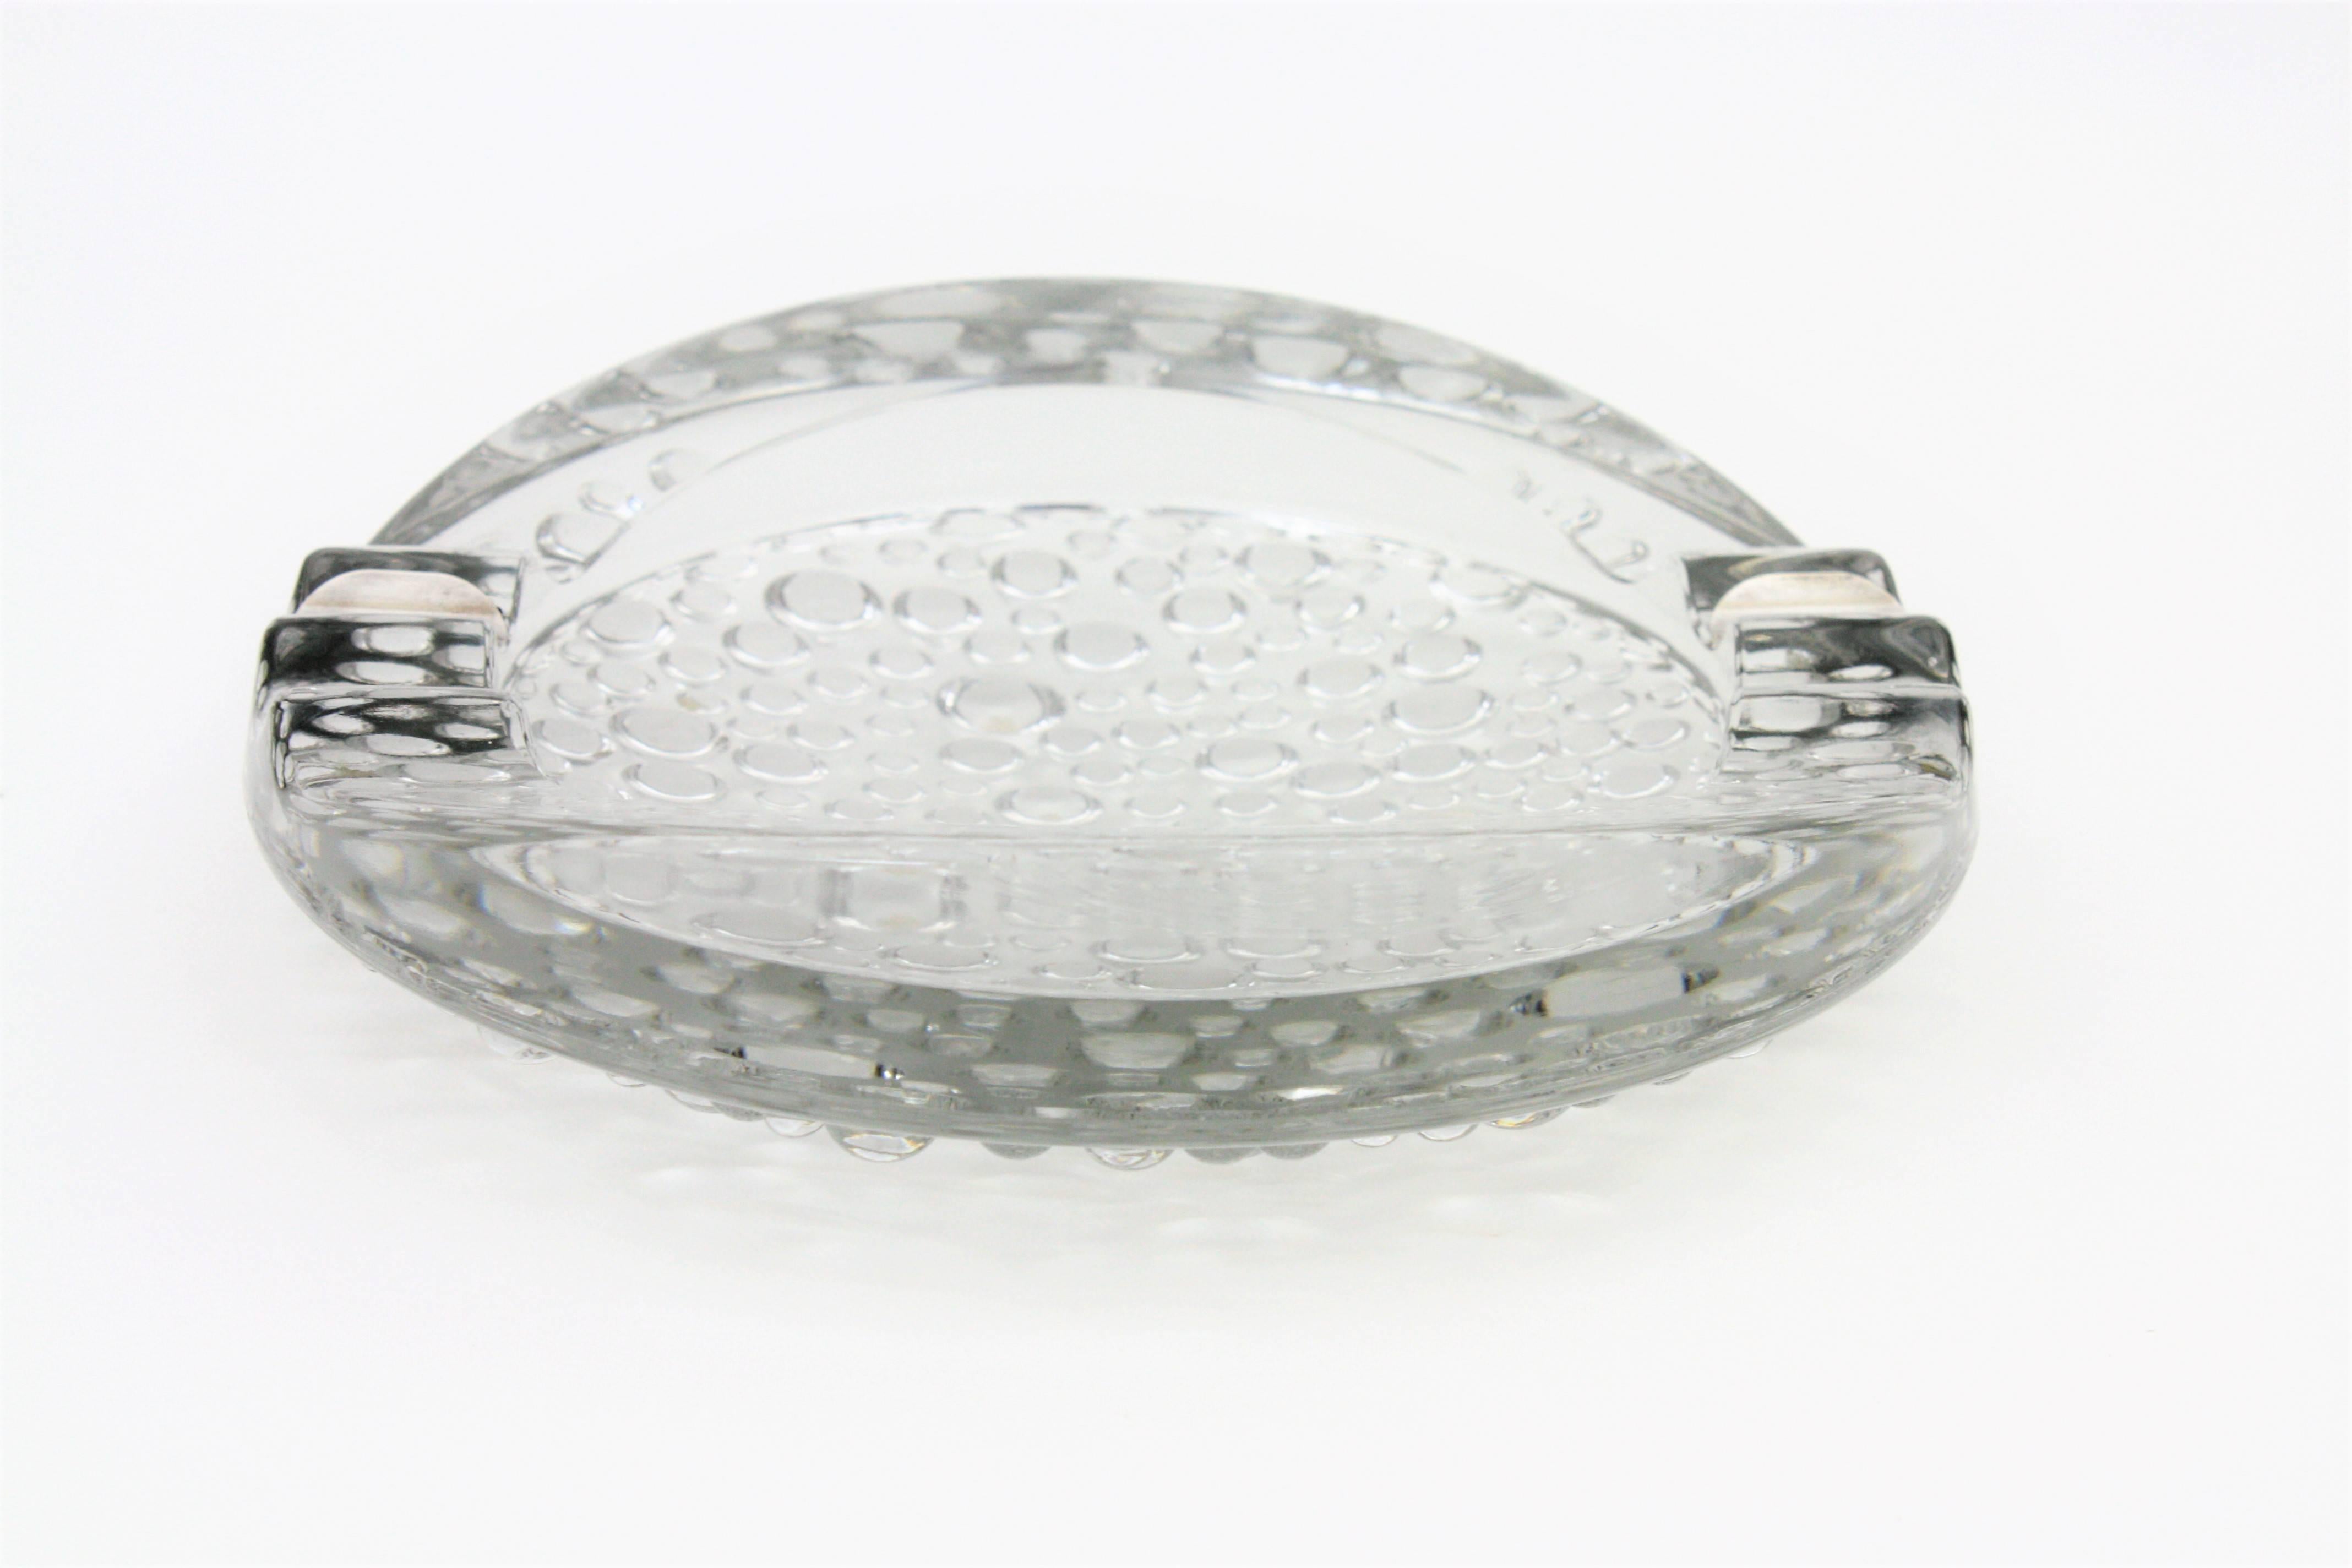 Murano Italian Art Glass Ashtray, Bubbles Design and Sterling Silver Details For Sale 2